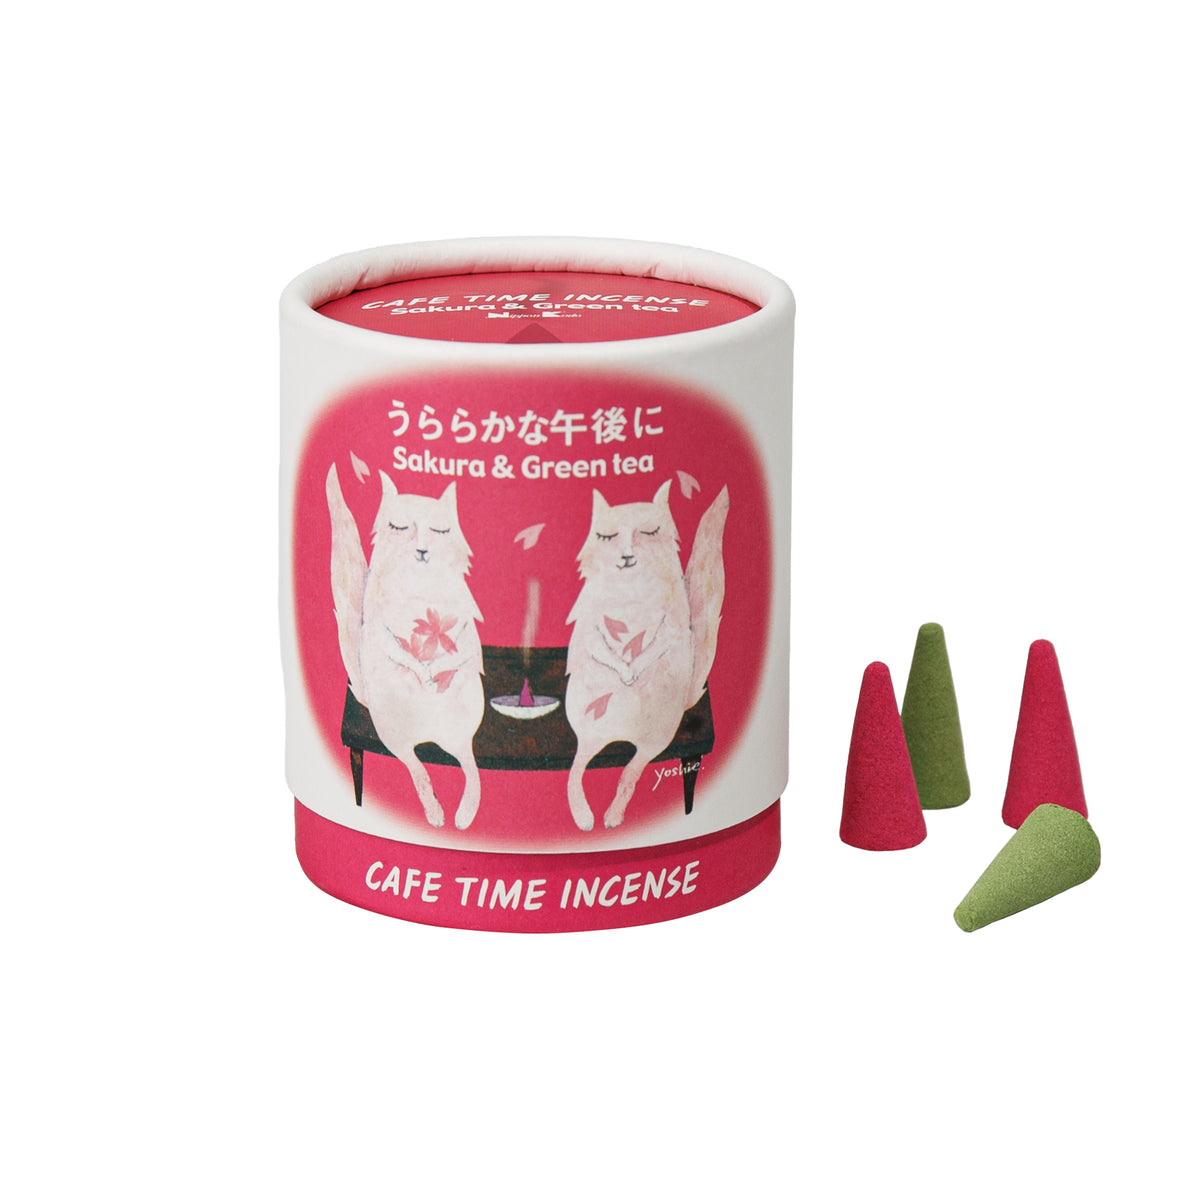 Primary image of Sakura Green Tea Cafe Time Incense Cones